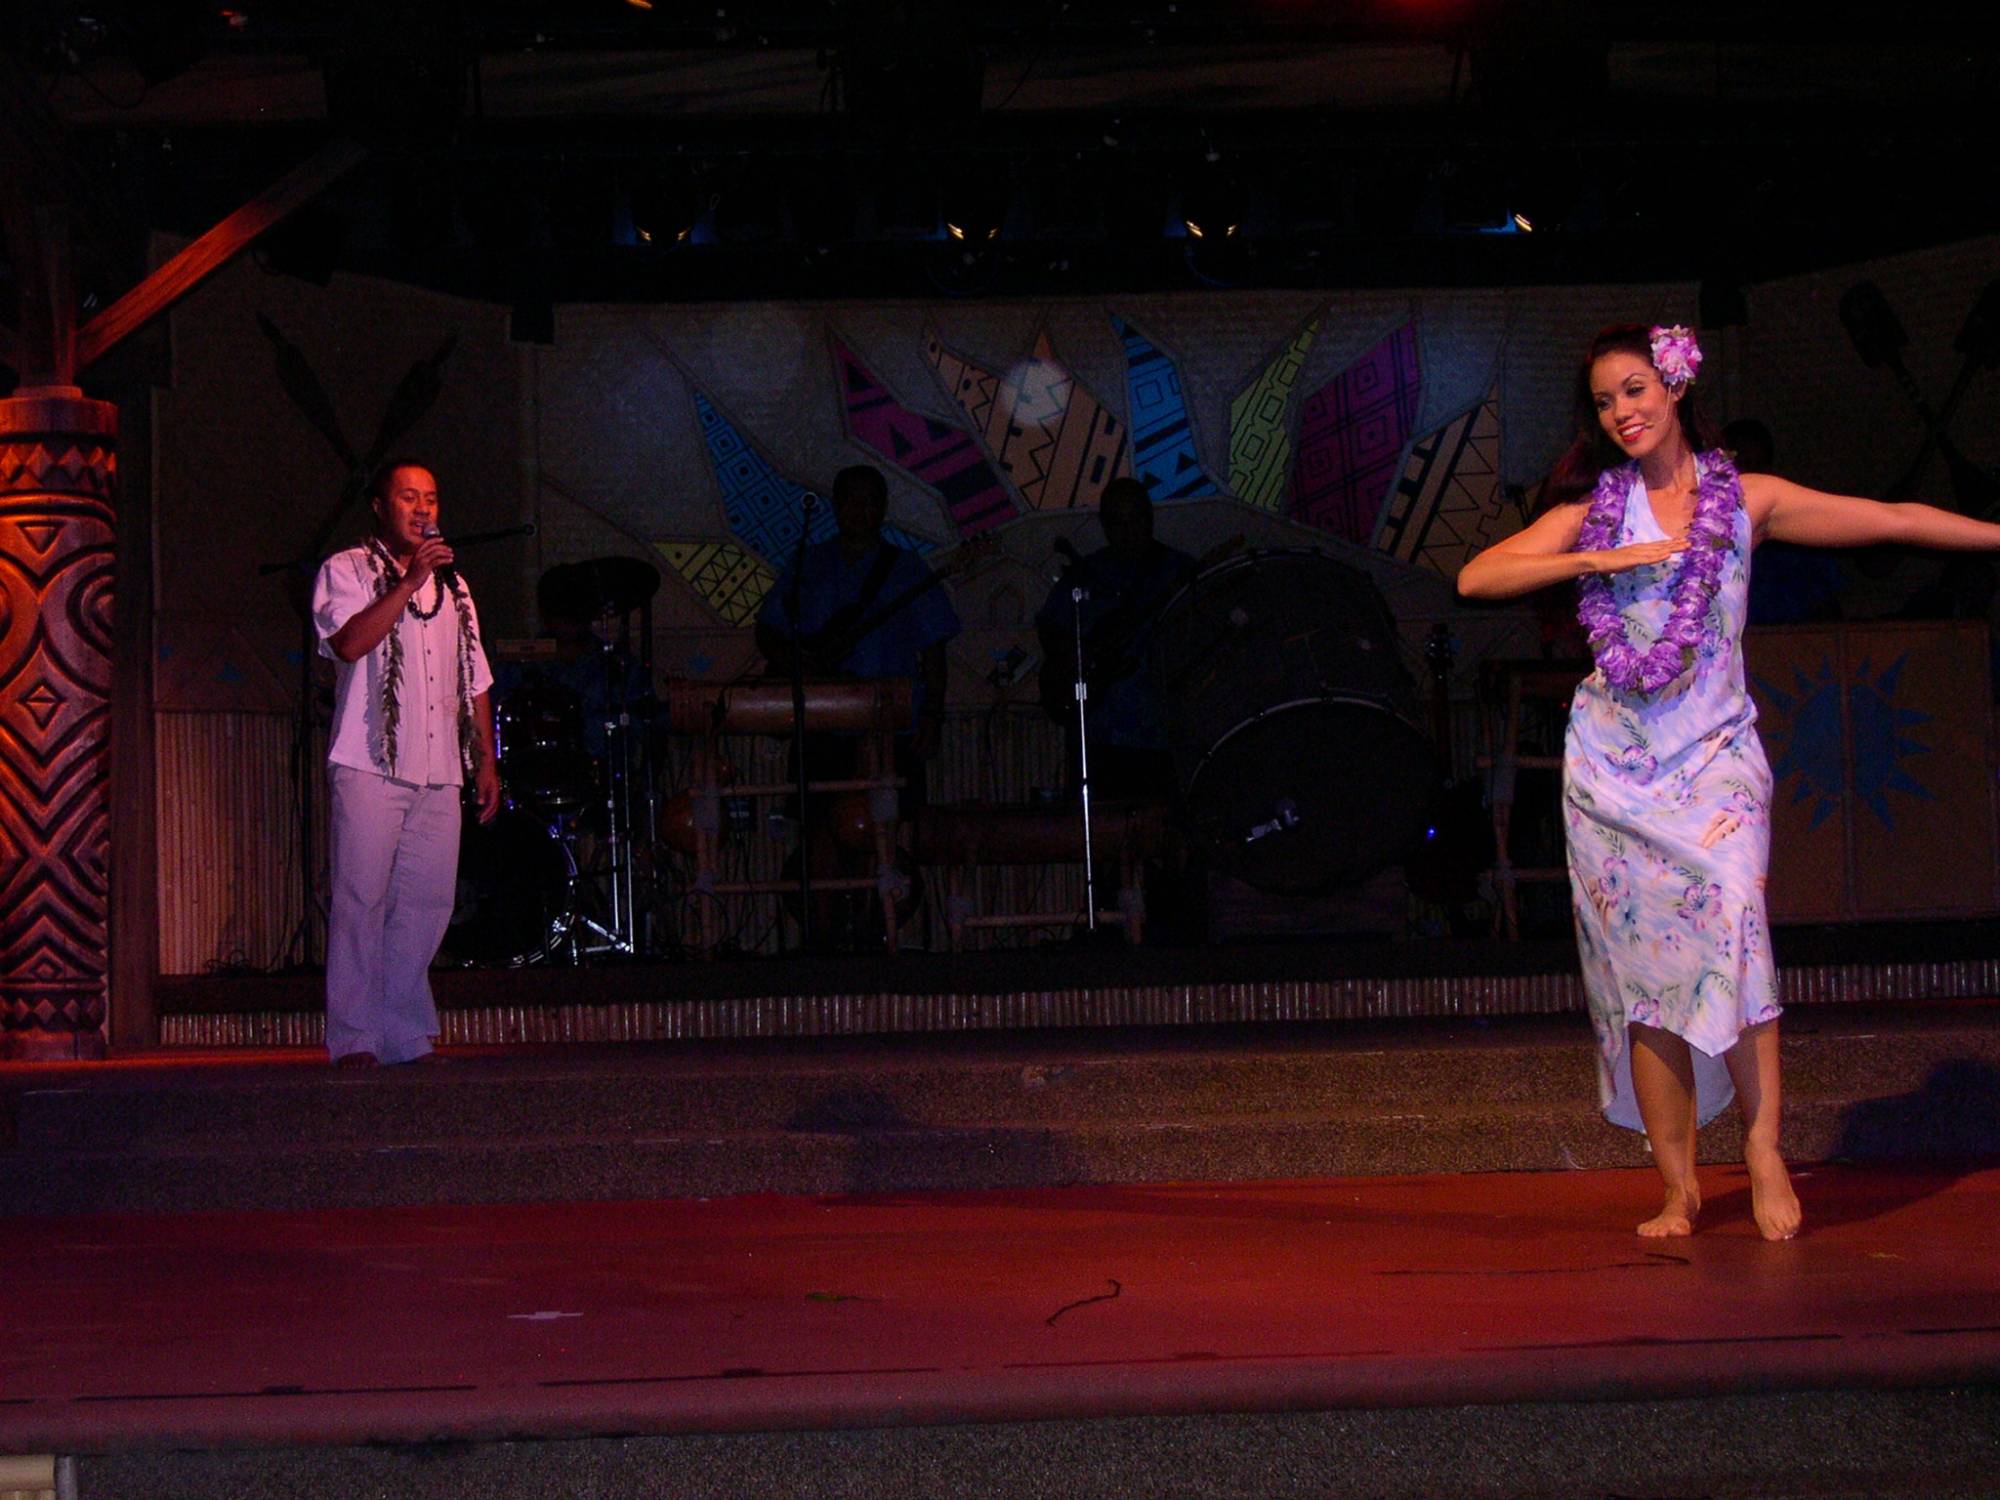 Spirit of Aloha - Dancers